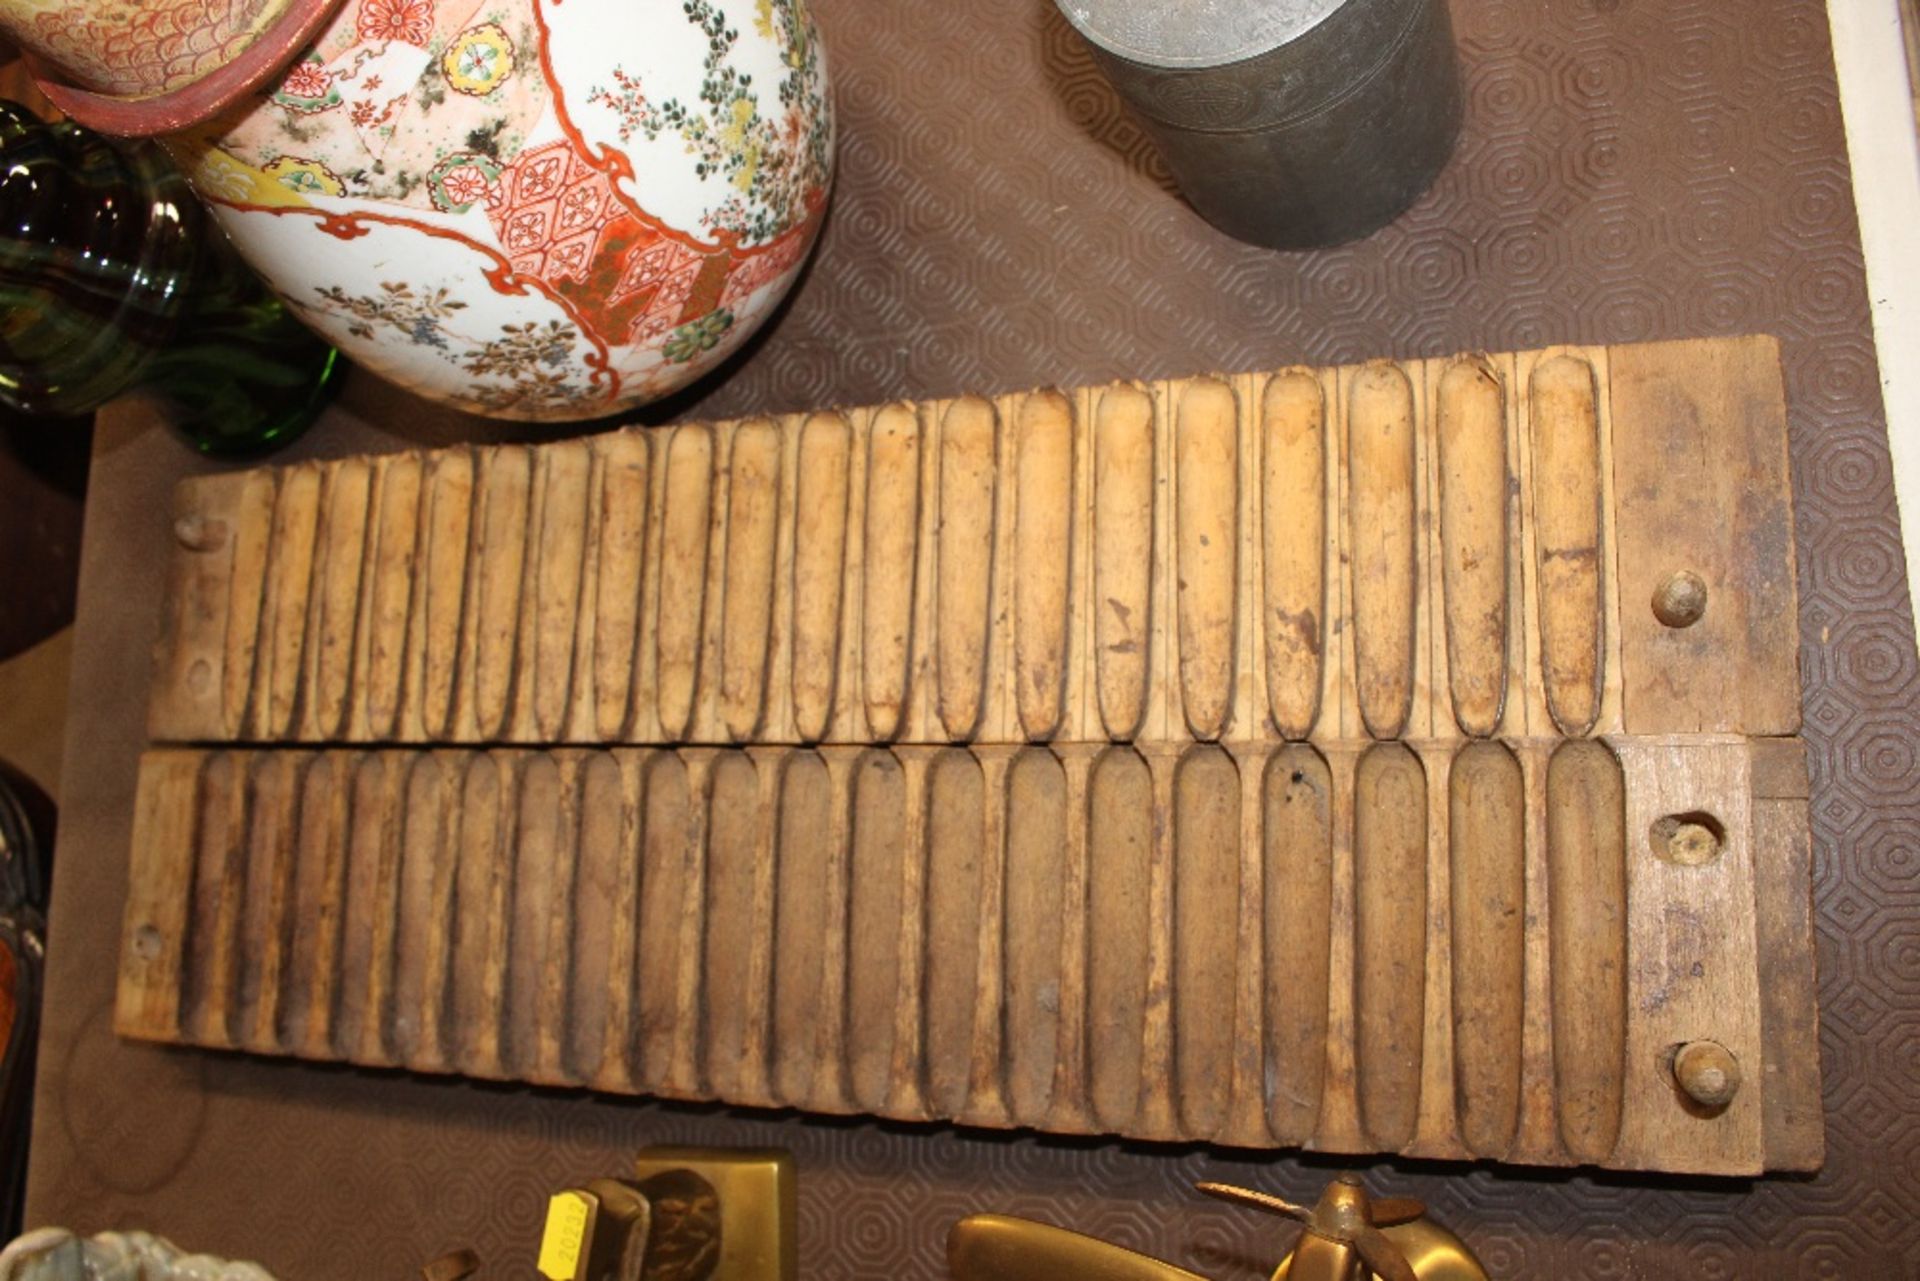 A Carl Hart wooden cigar mould - Image 3 of 4